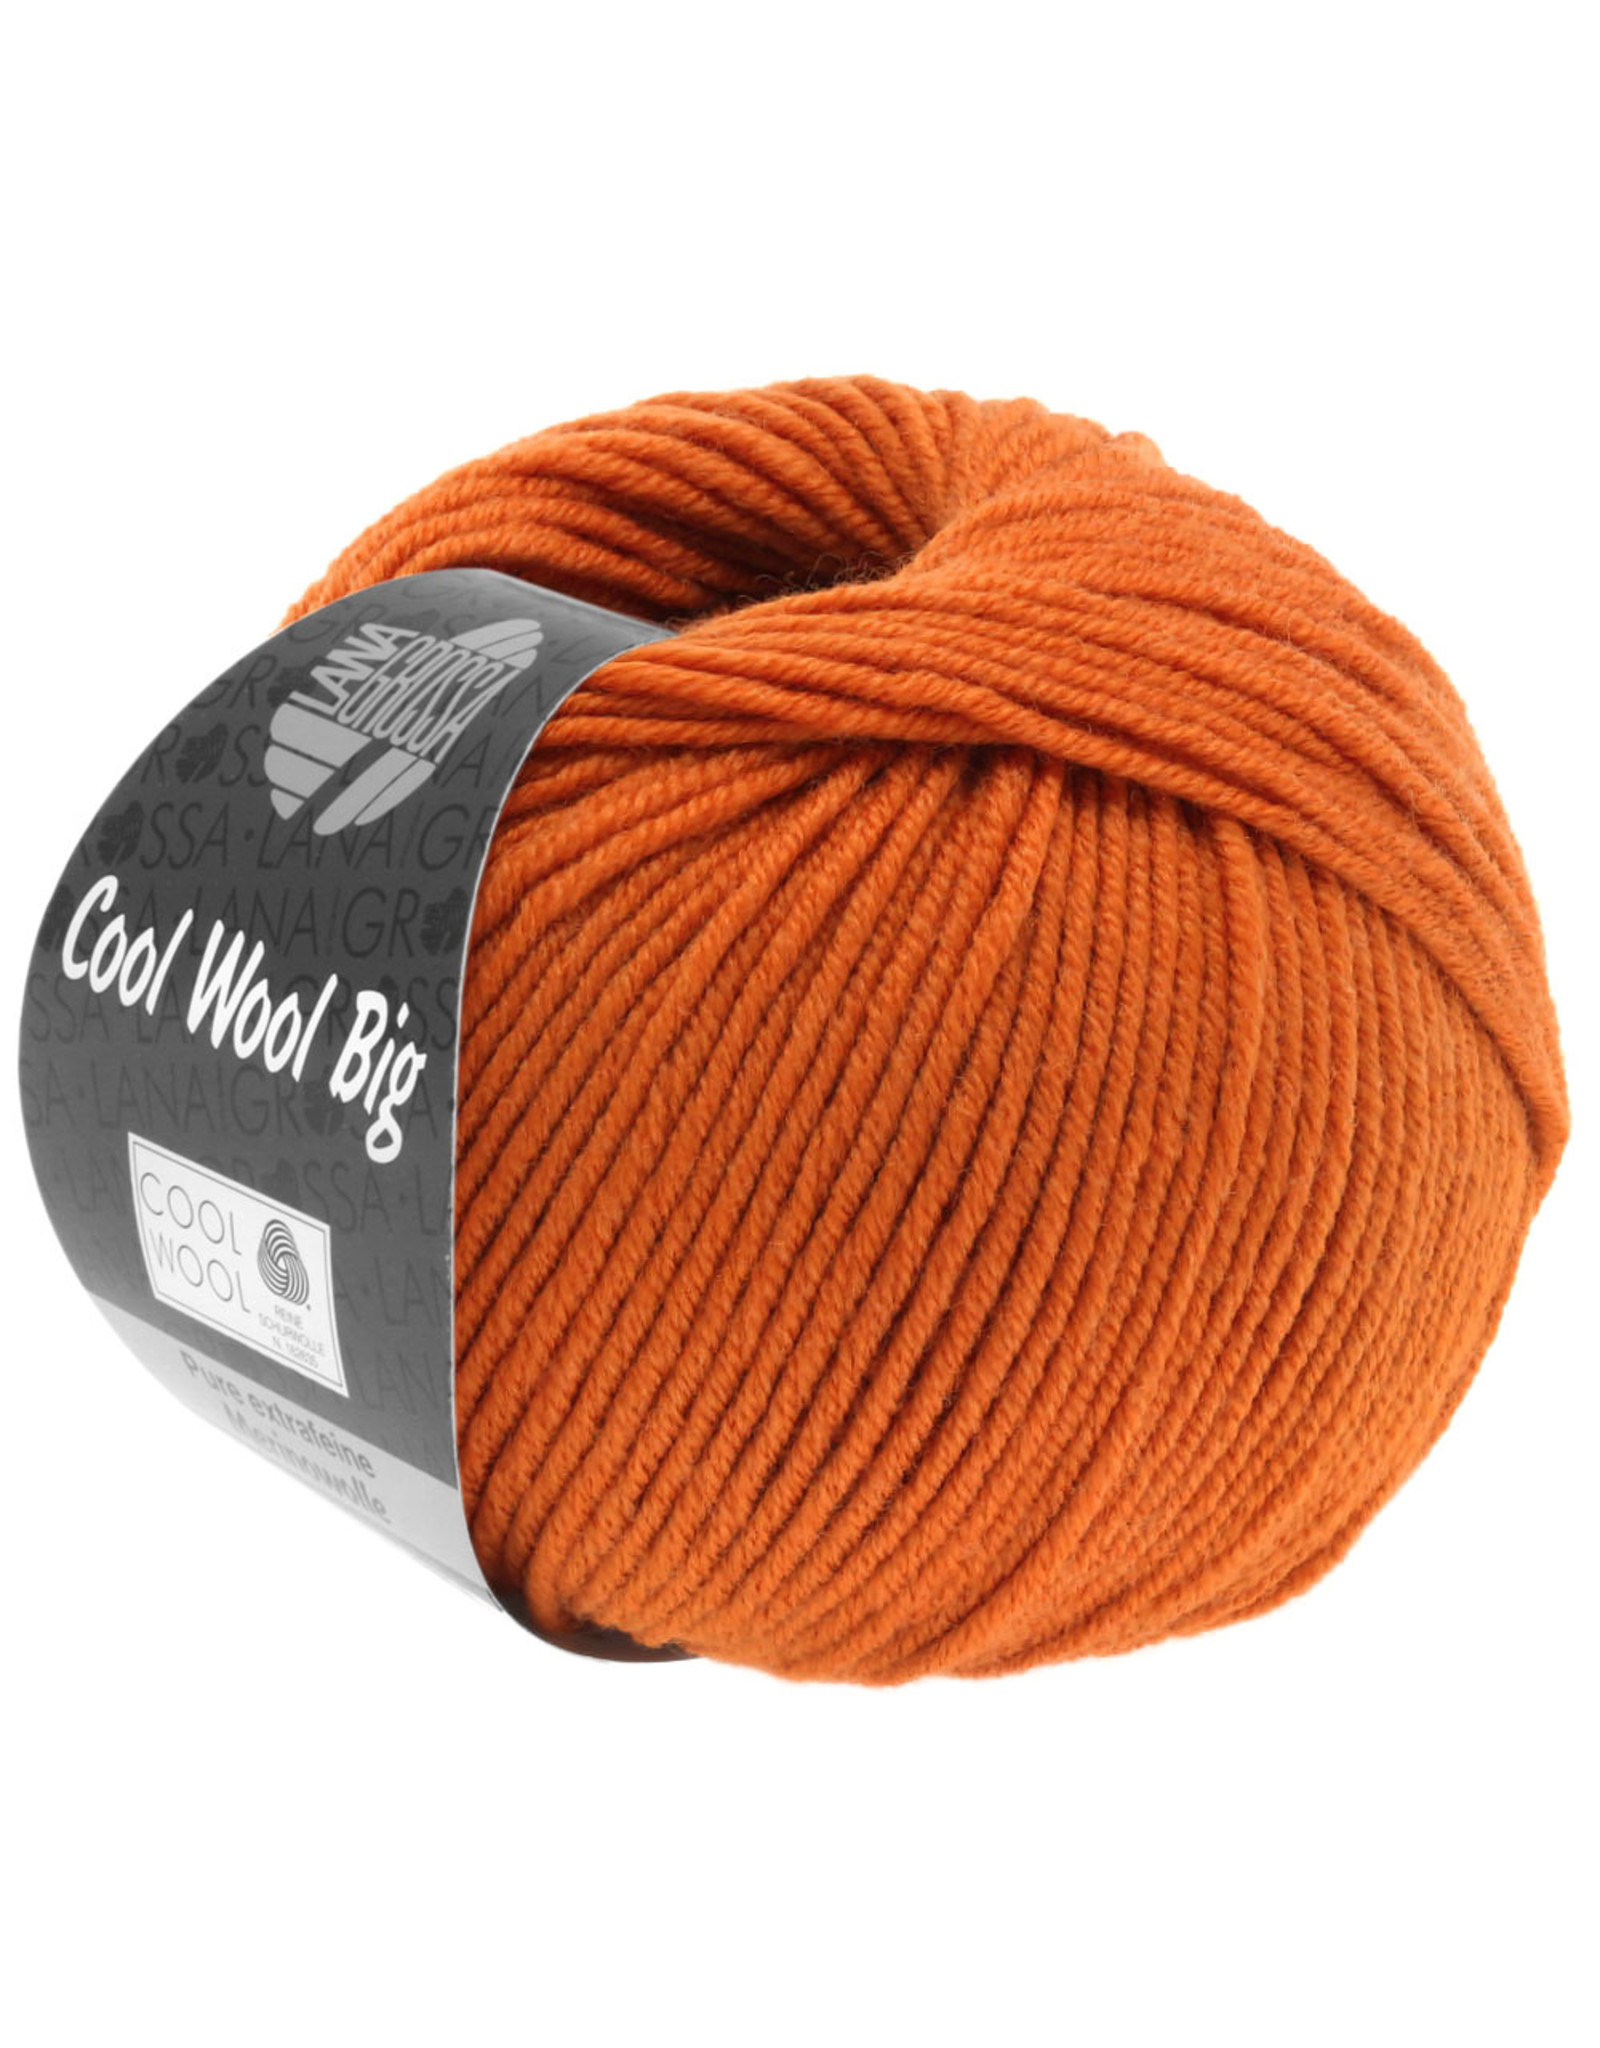 Lana Grossa Lana Grossa Cool Wool Big 970